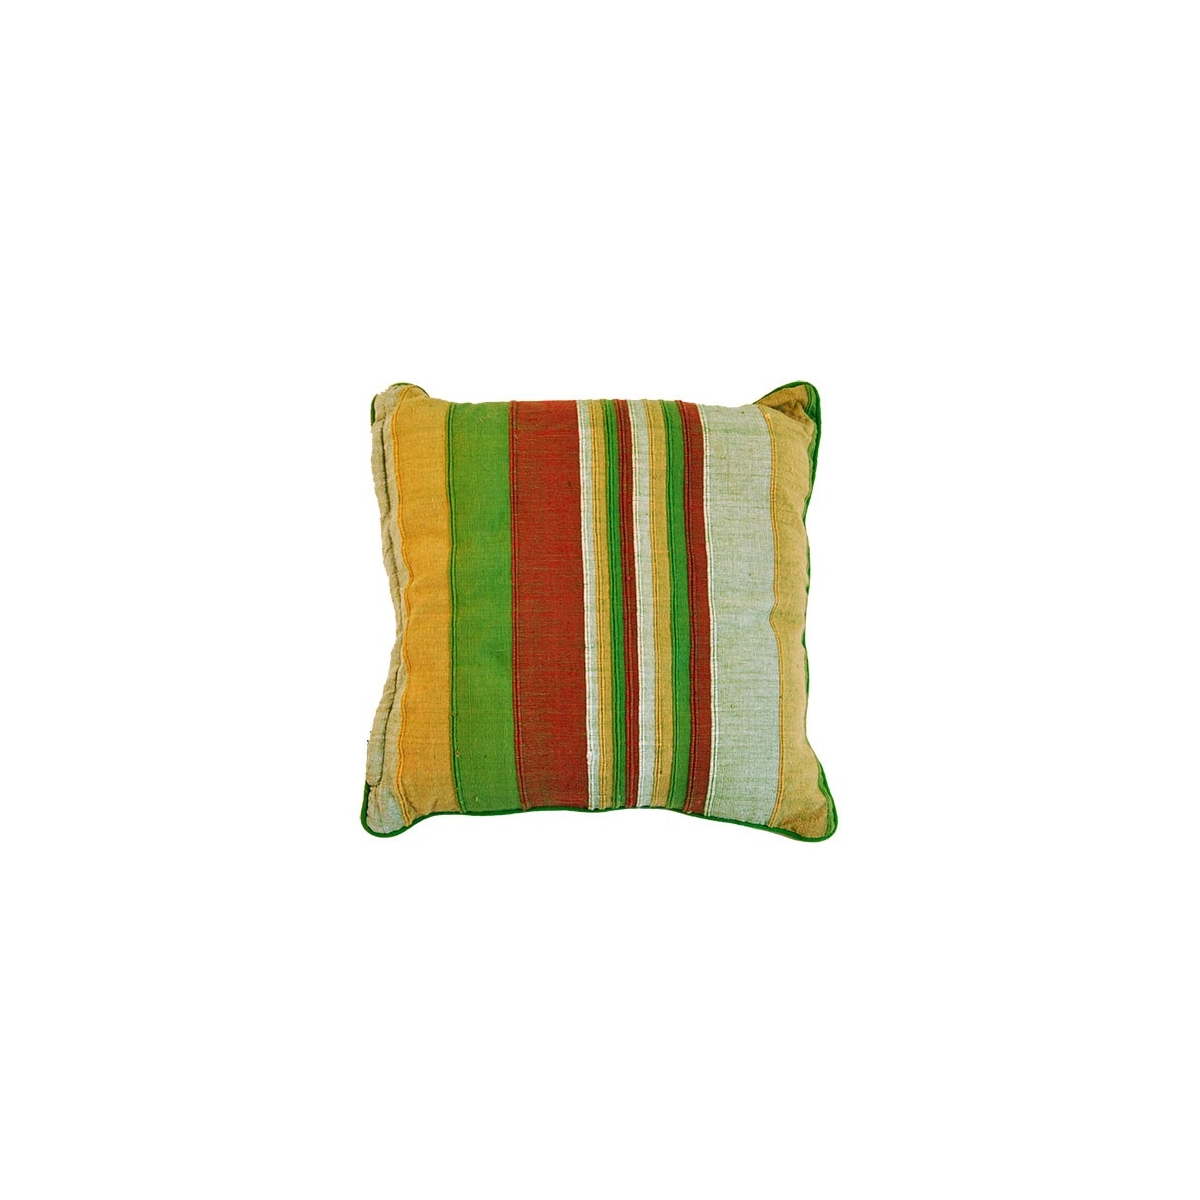 Fodera cuscino in morbido cotone, motivo righe verdi a contrasto